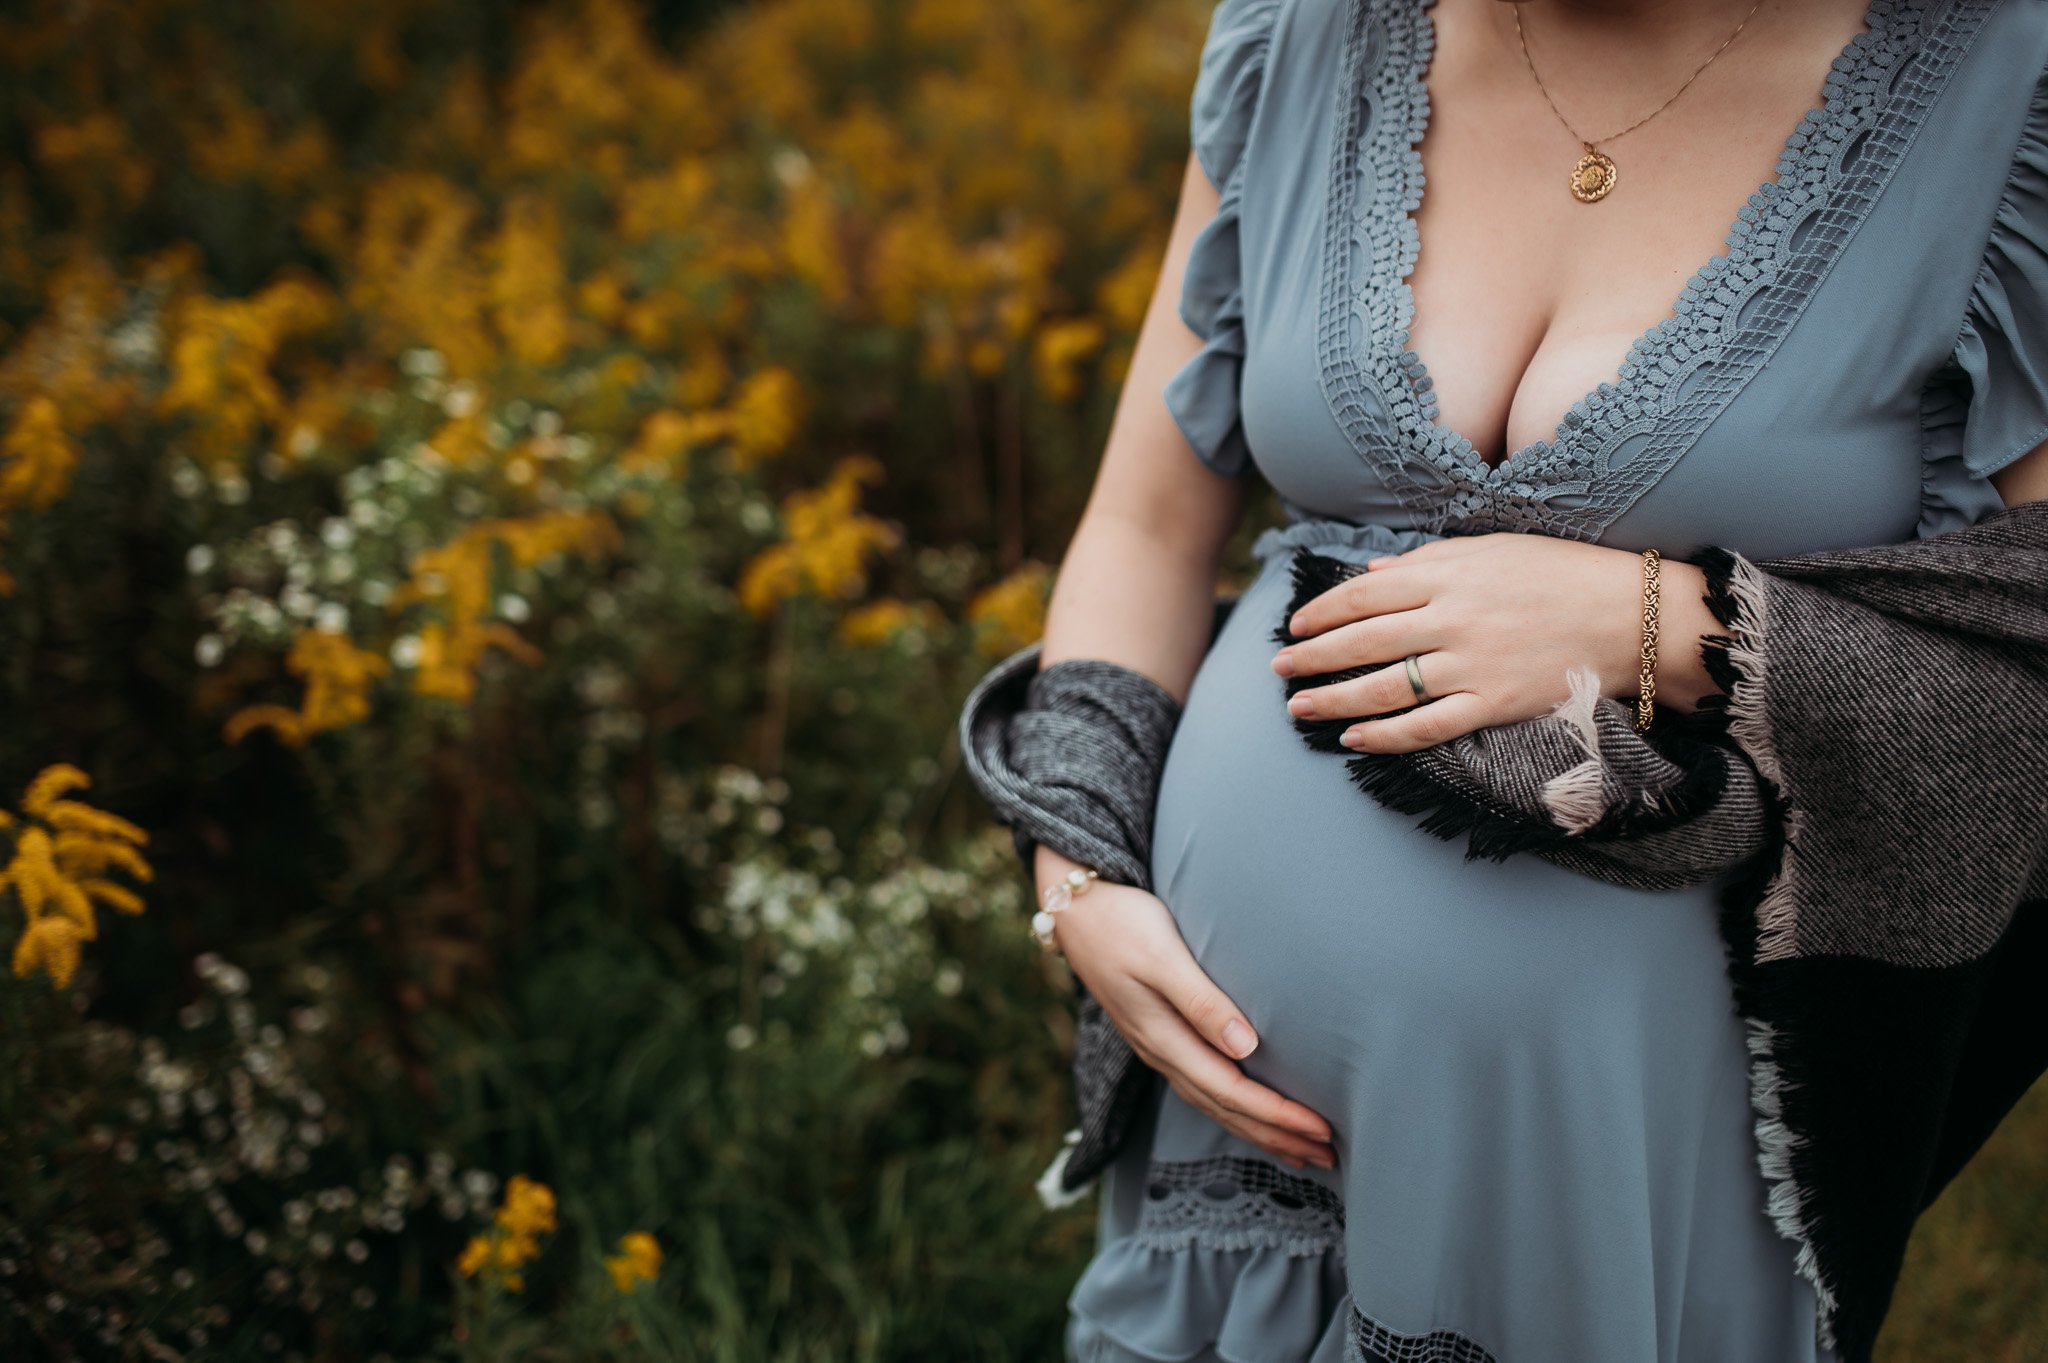 Maternity-photos-columbus-ohio-erika-venci-photography